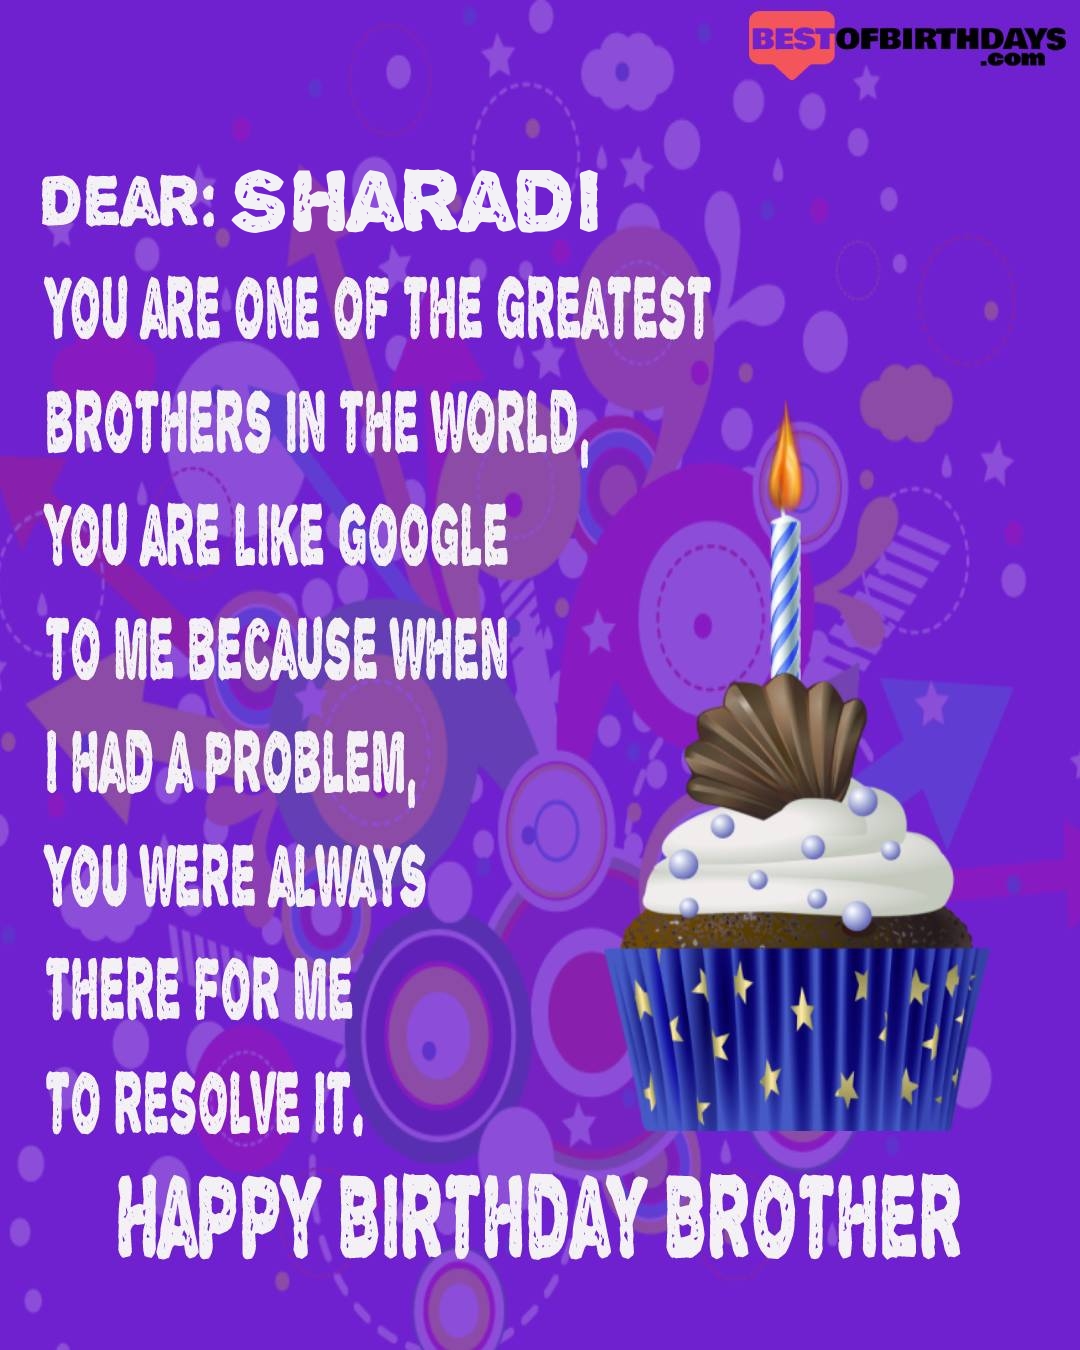 Happy birthday sharadi bhai brother bro